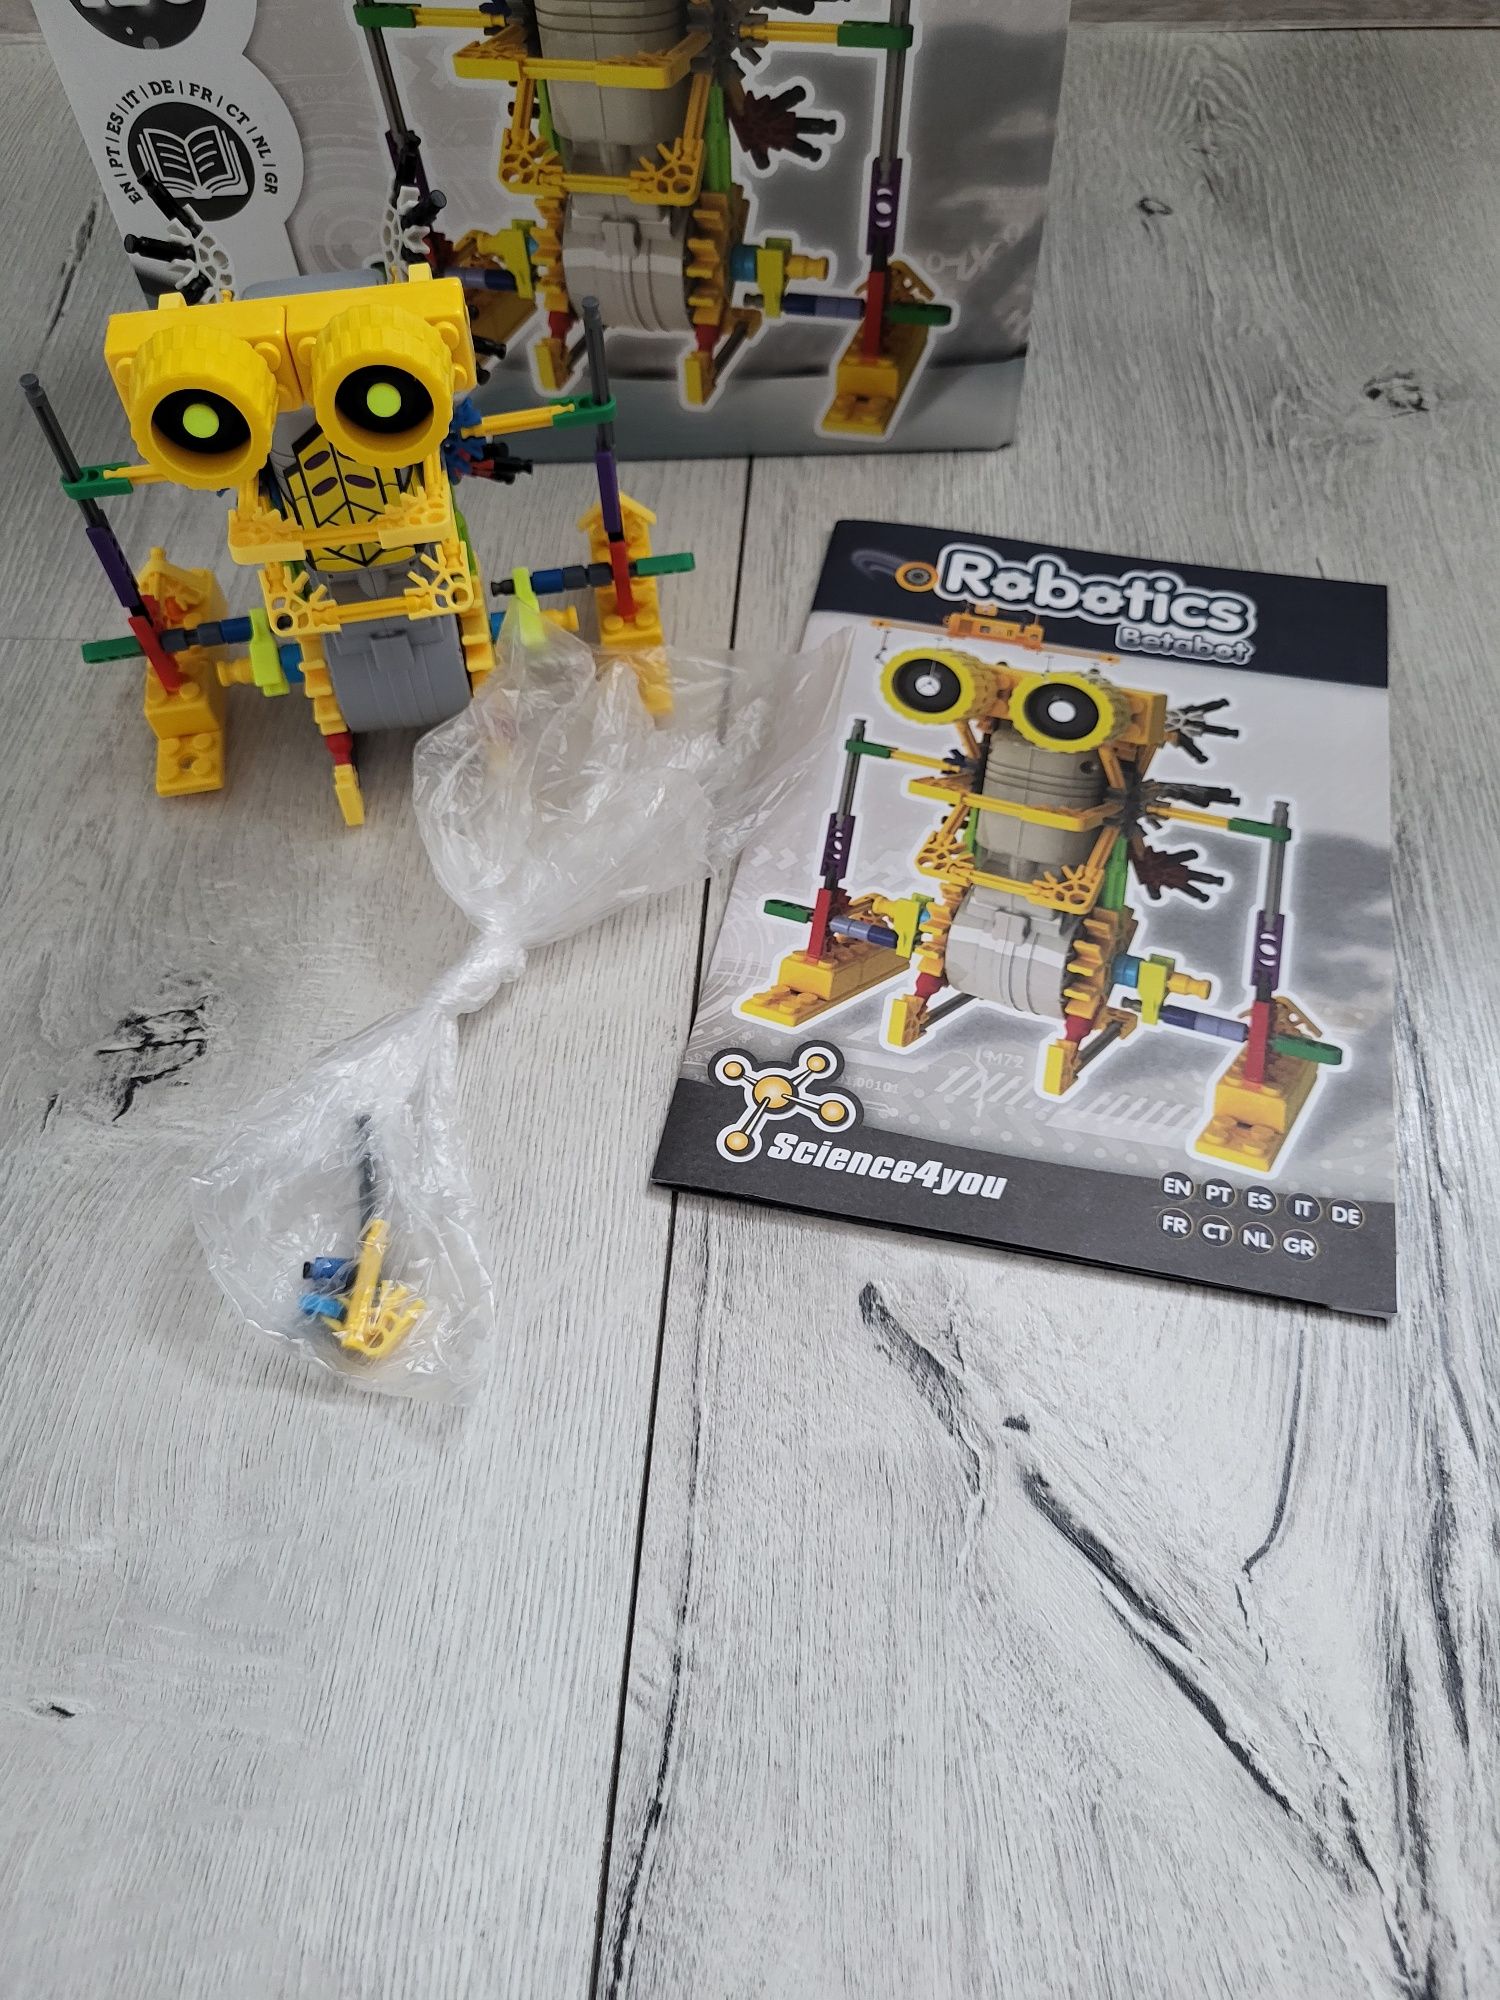 Robotics betabot science4you stan idealny zabawka robotyka